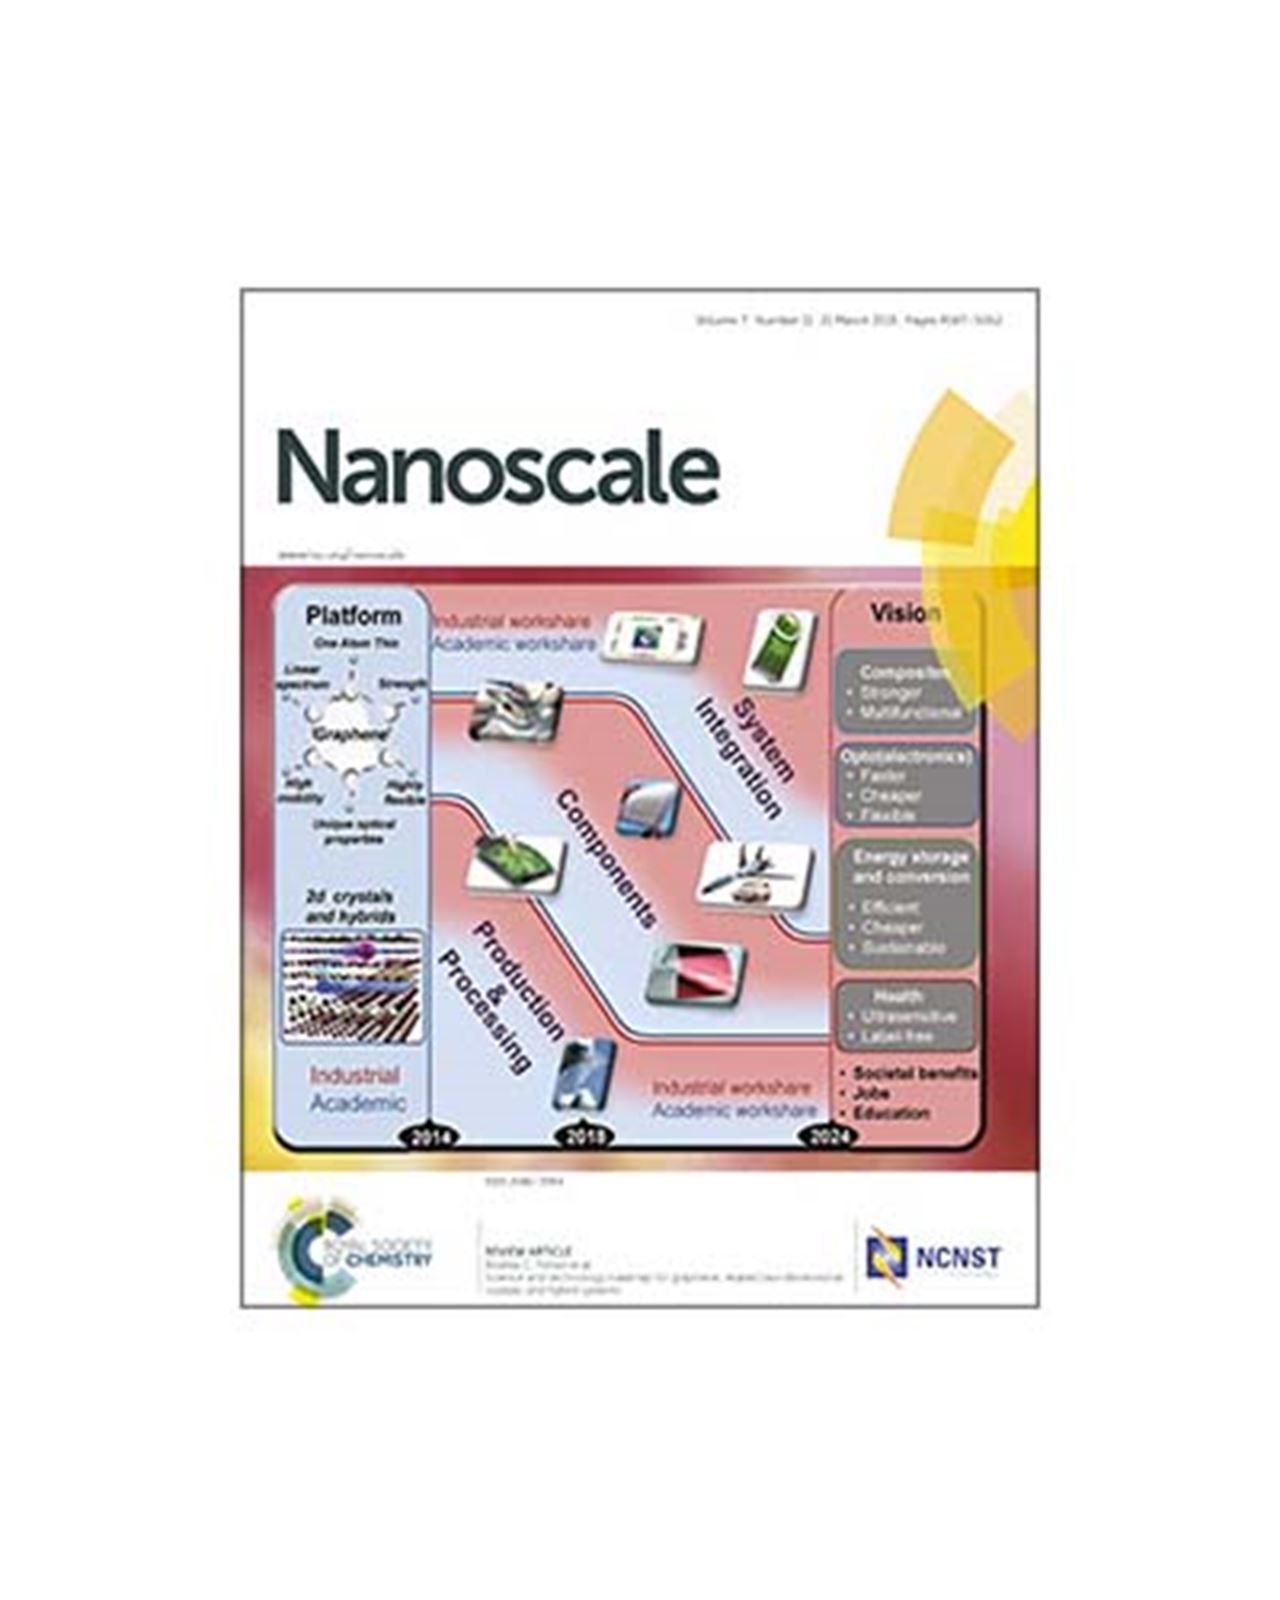 Cover image: Nanoscale journal's Roadmap publication.